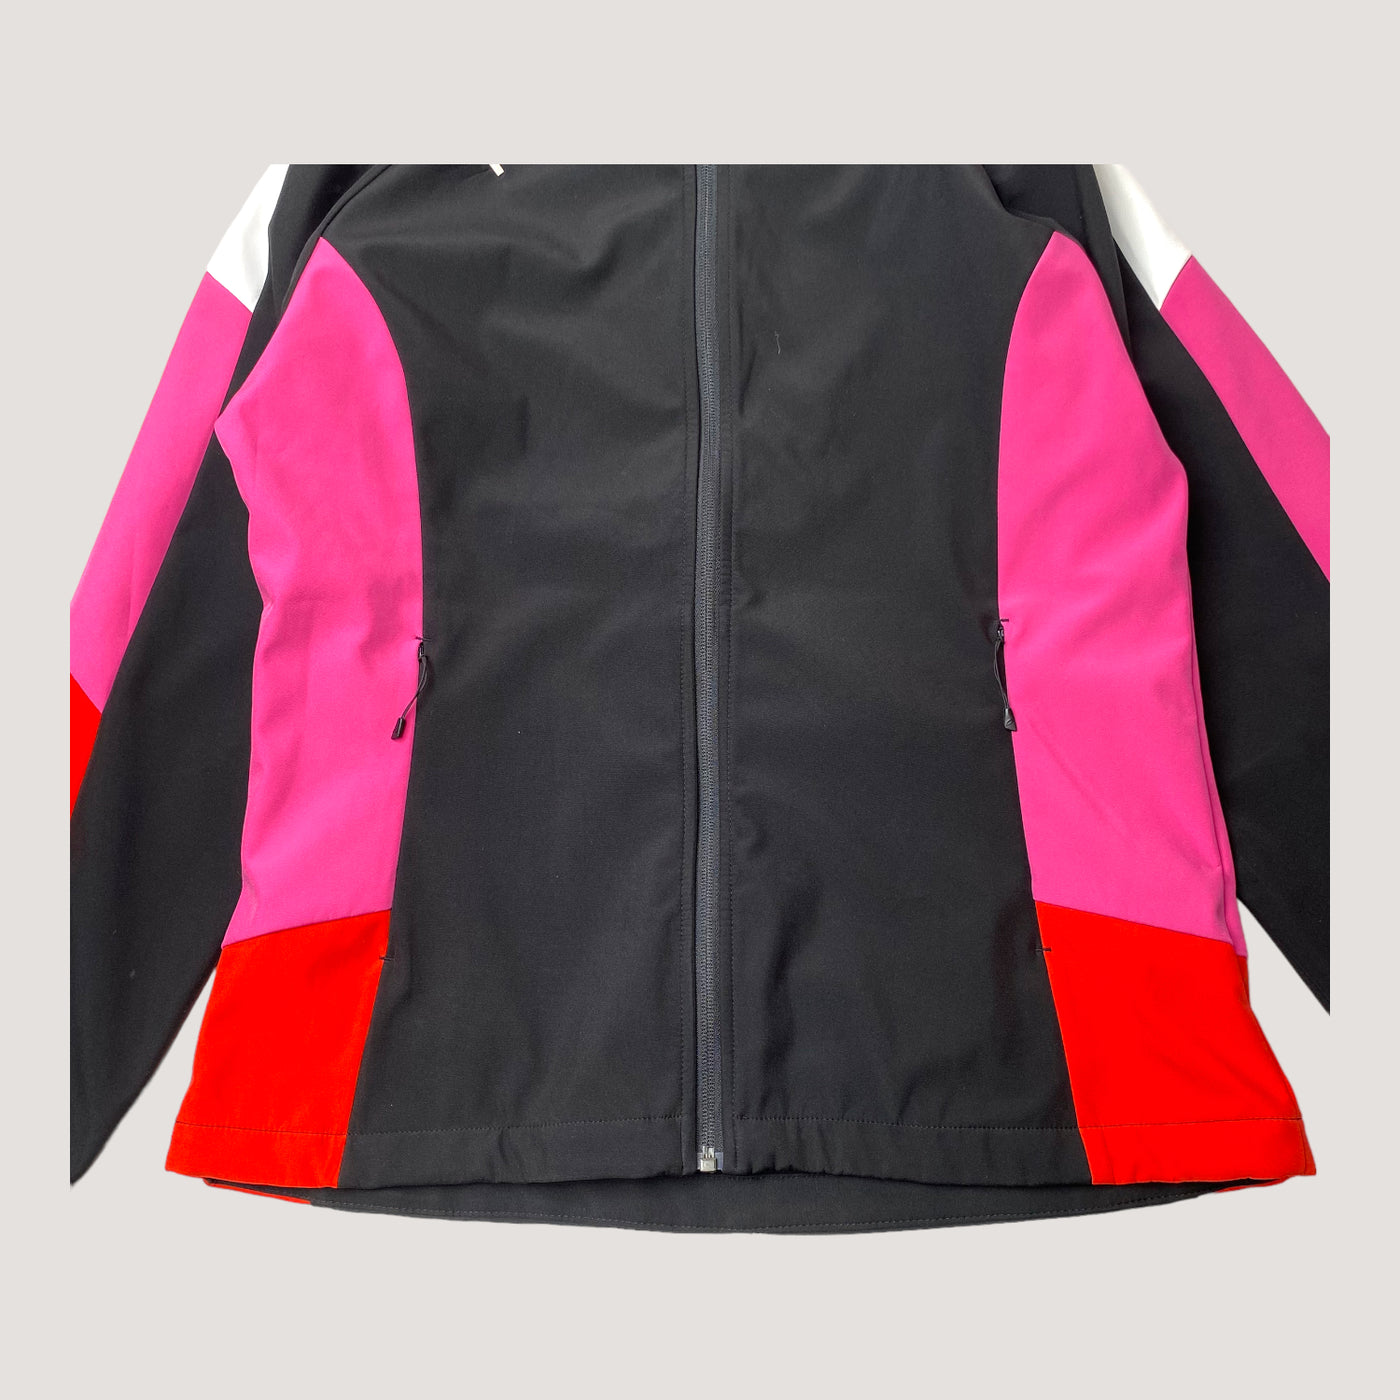 Halti softshell cross country ski jacket, black | woman 42